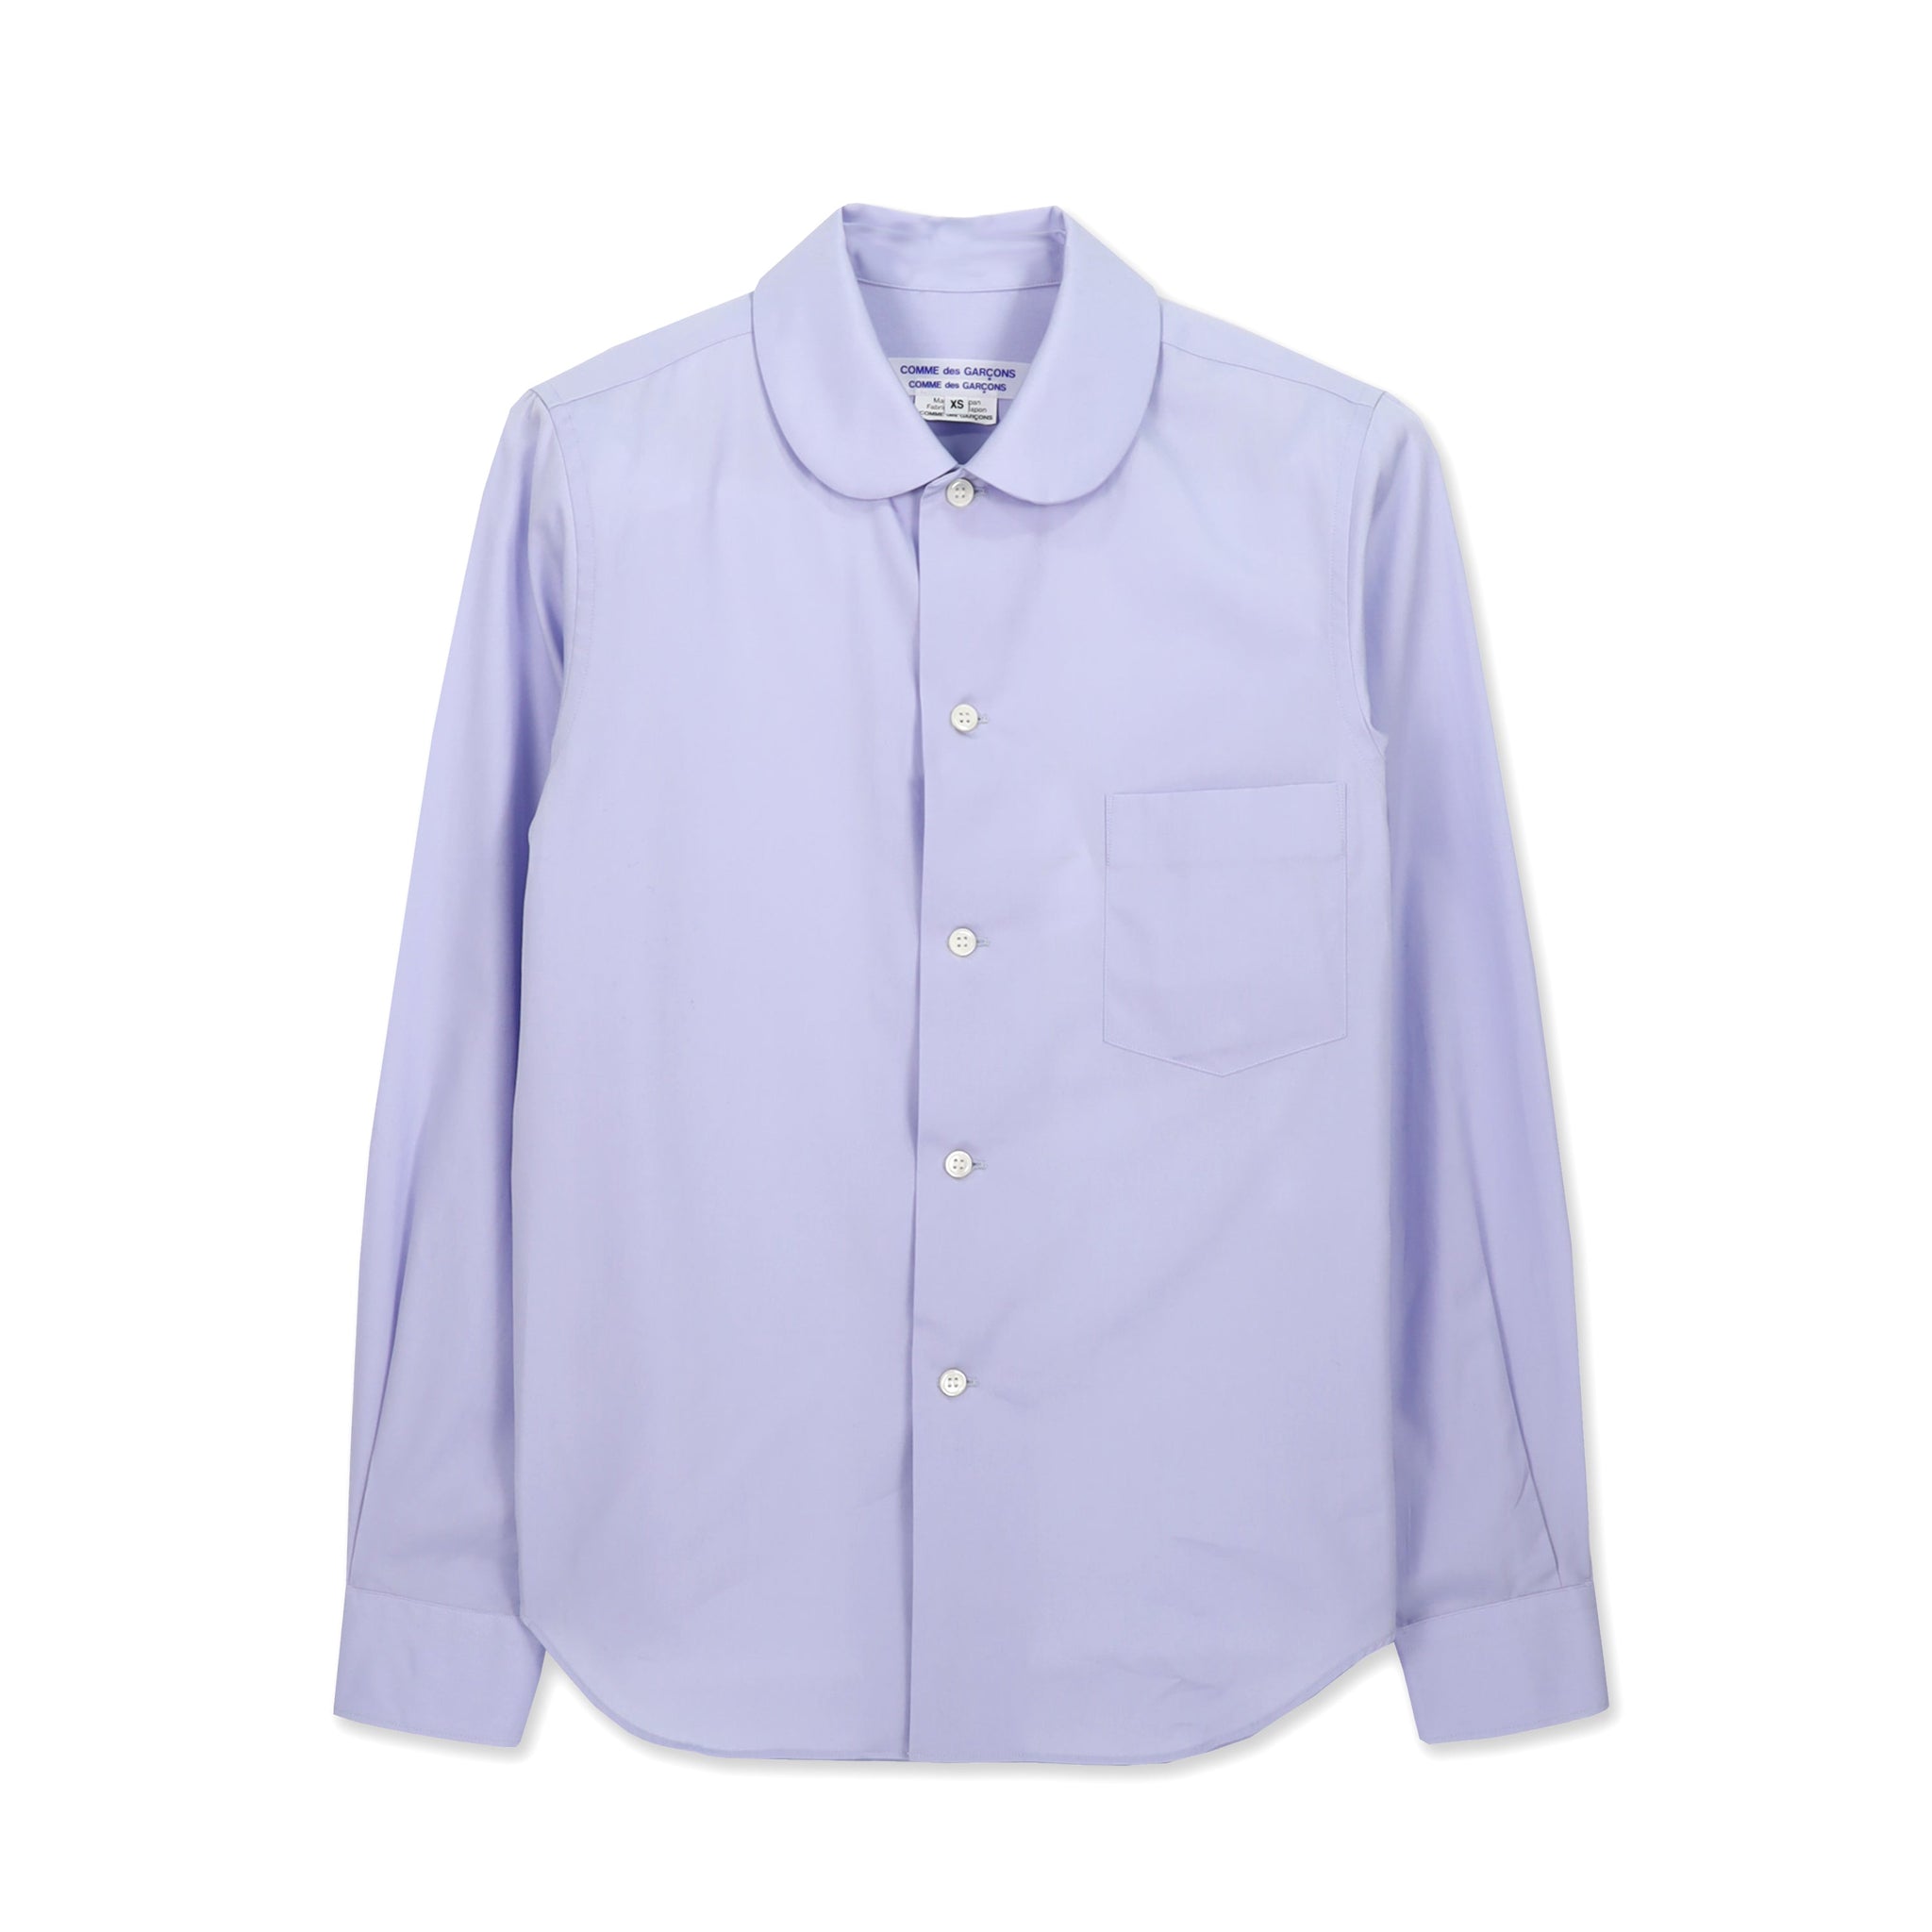 CC TB Cotton Broad Shirt with Peter Pan Collar Light Purple